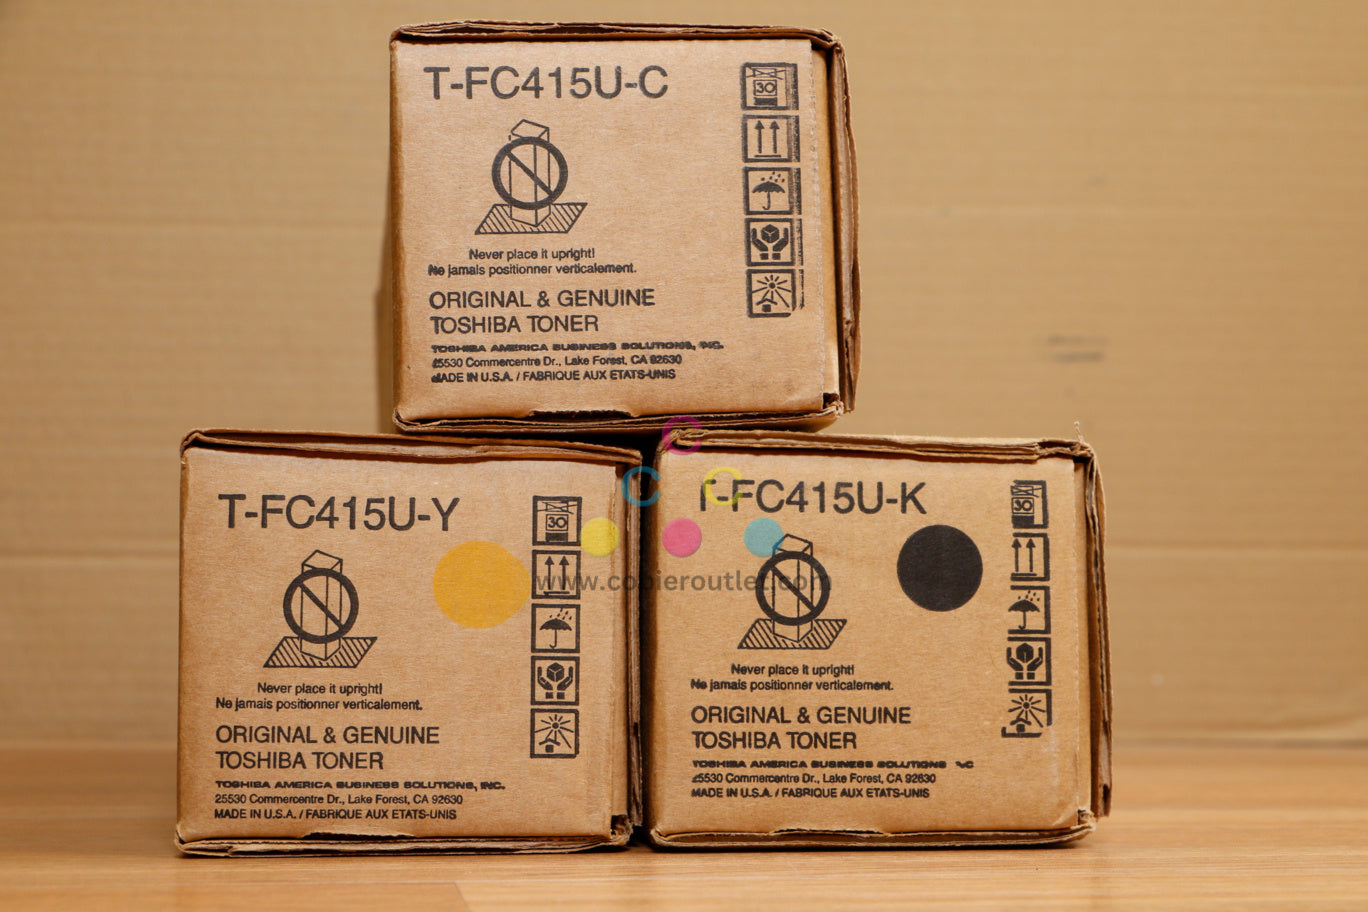 Genuine Toshiba T-FC415U CYK Toner Cartridge eSTUDIO 2515AC 3015AC 3515AC 5015AC